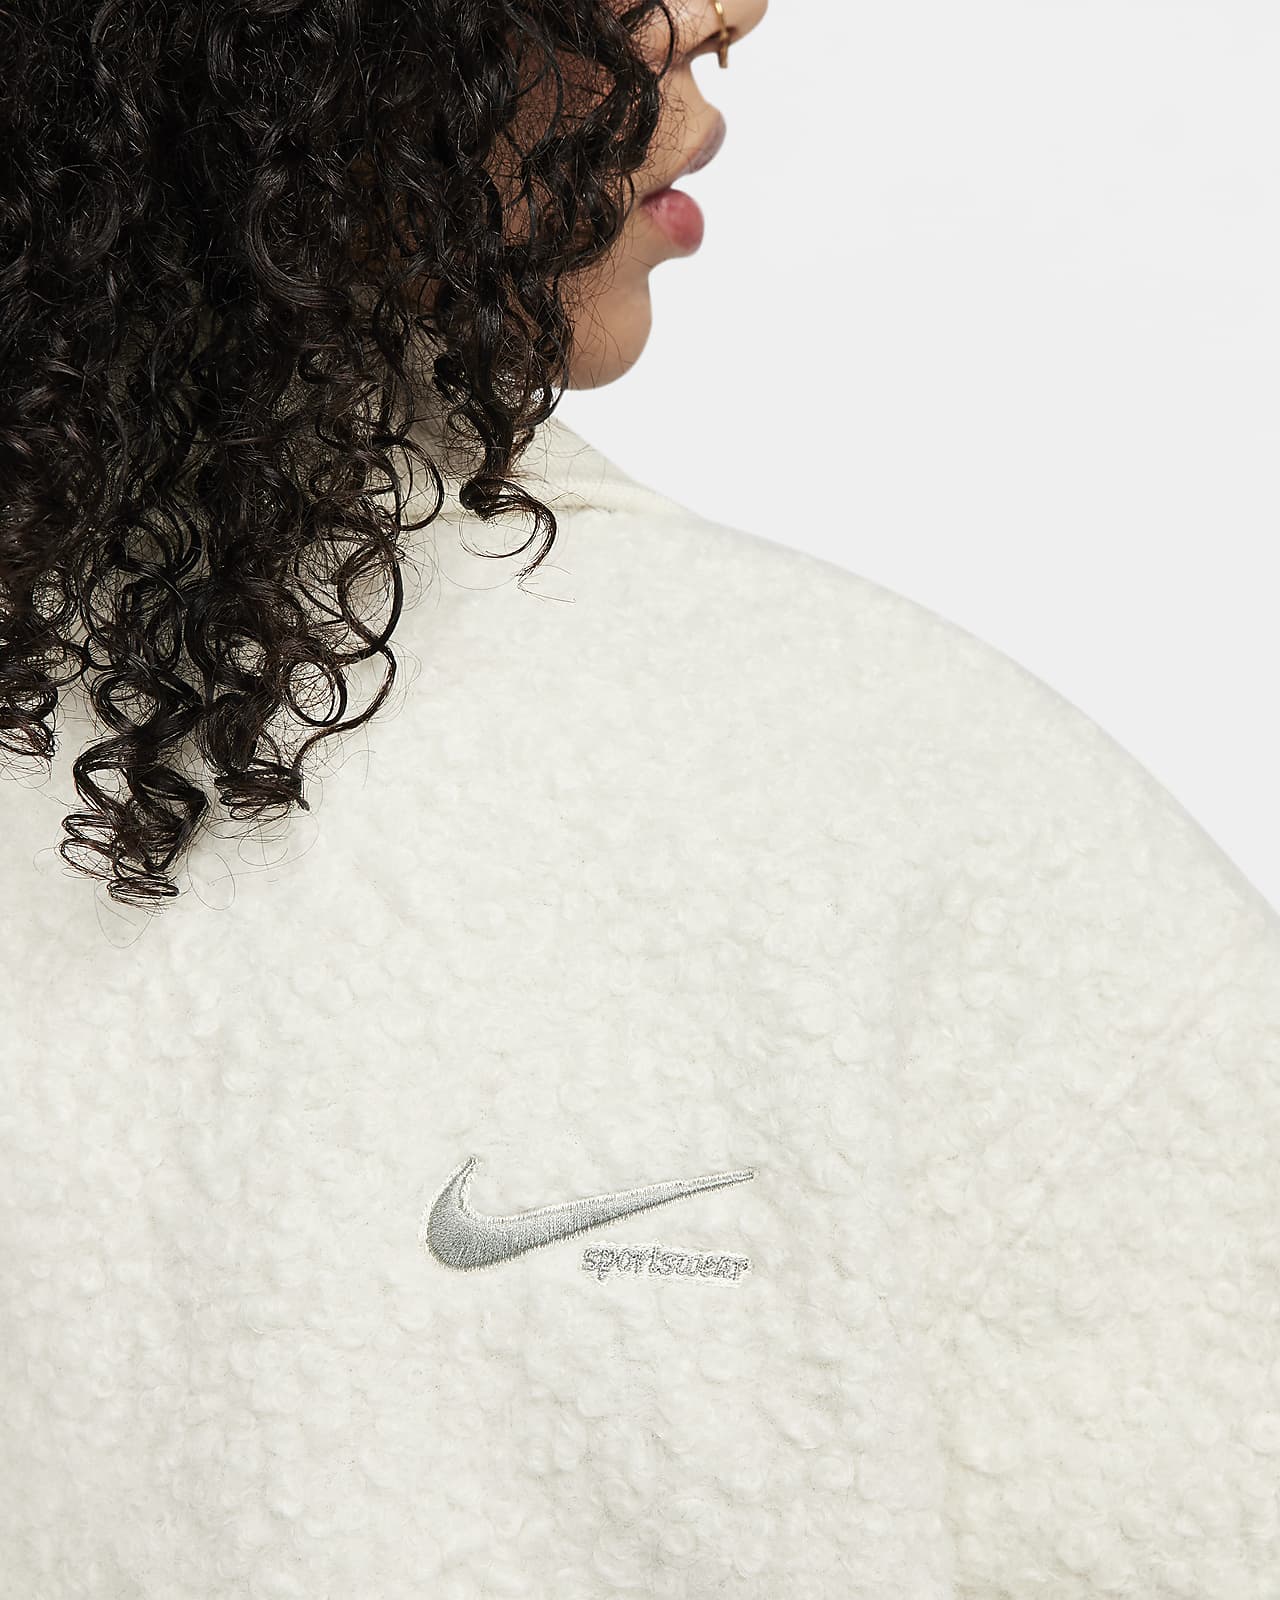 Nike Women's High-Pile Fleece Outfit